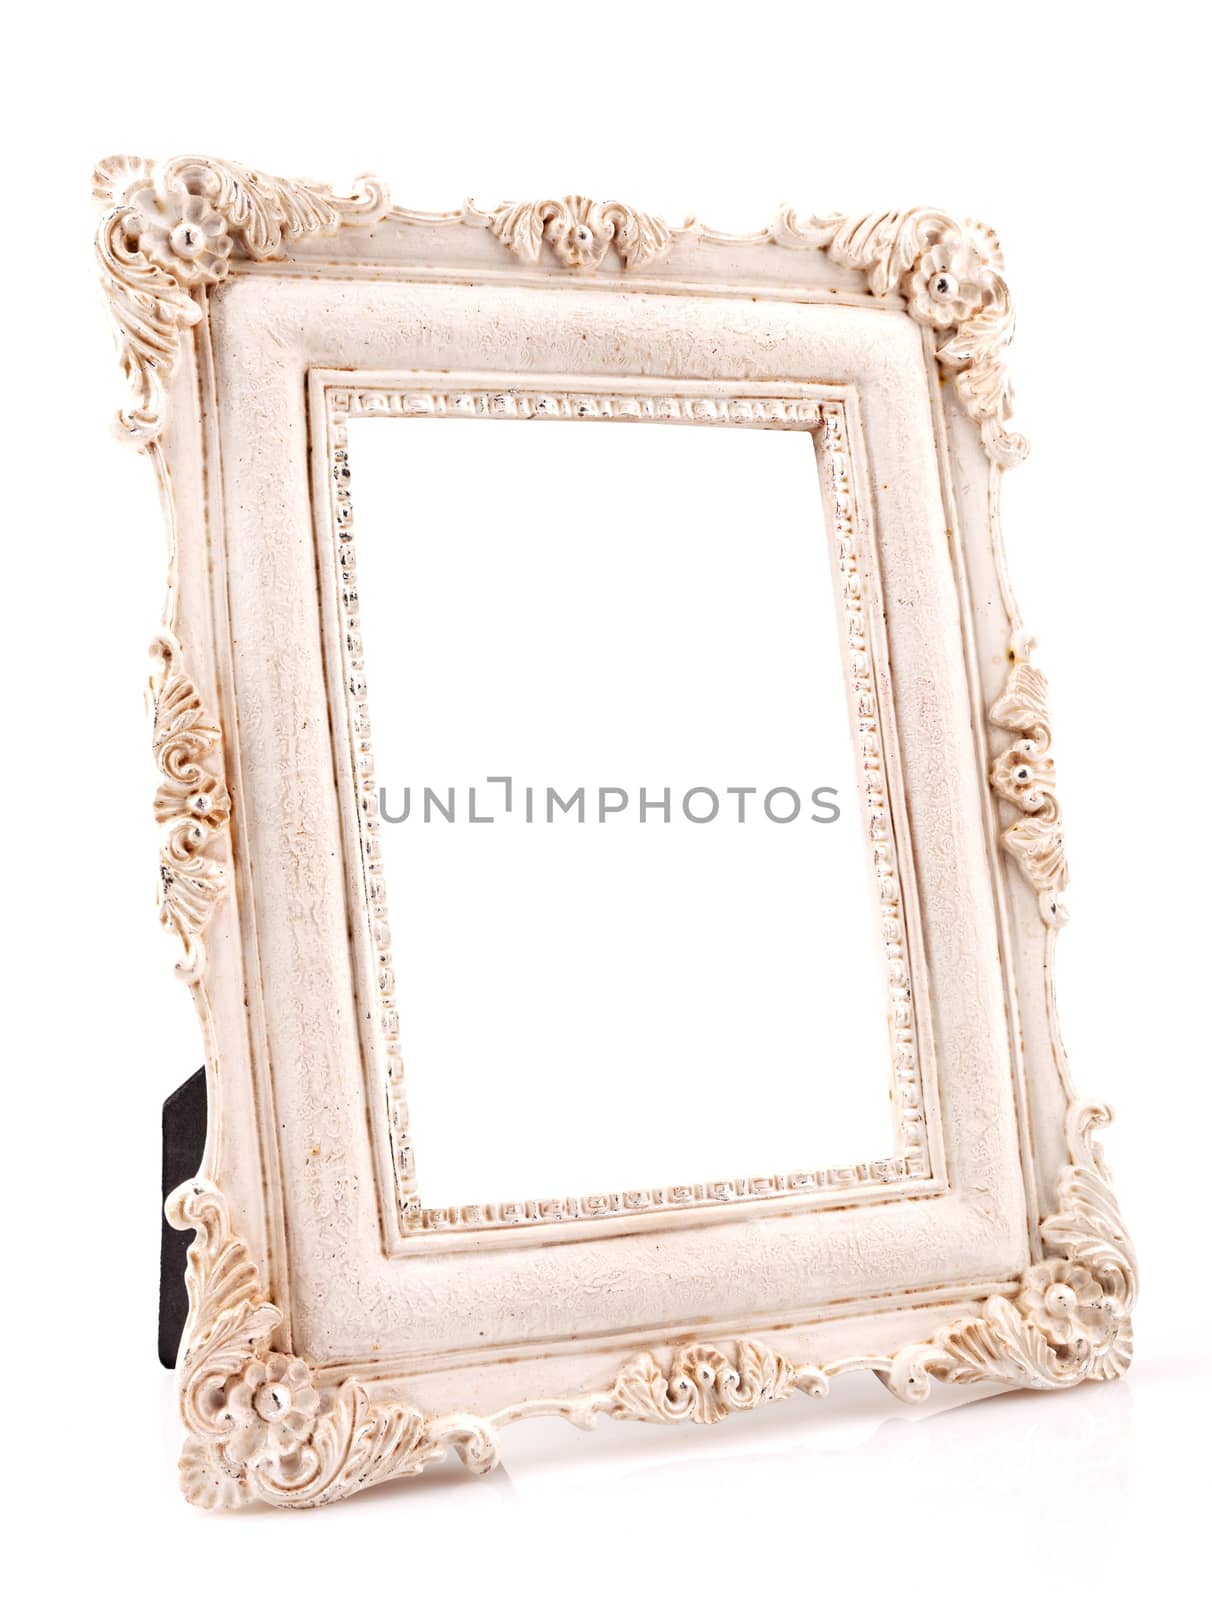 Empty white vintage frame isolated on white

